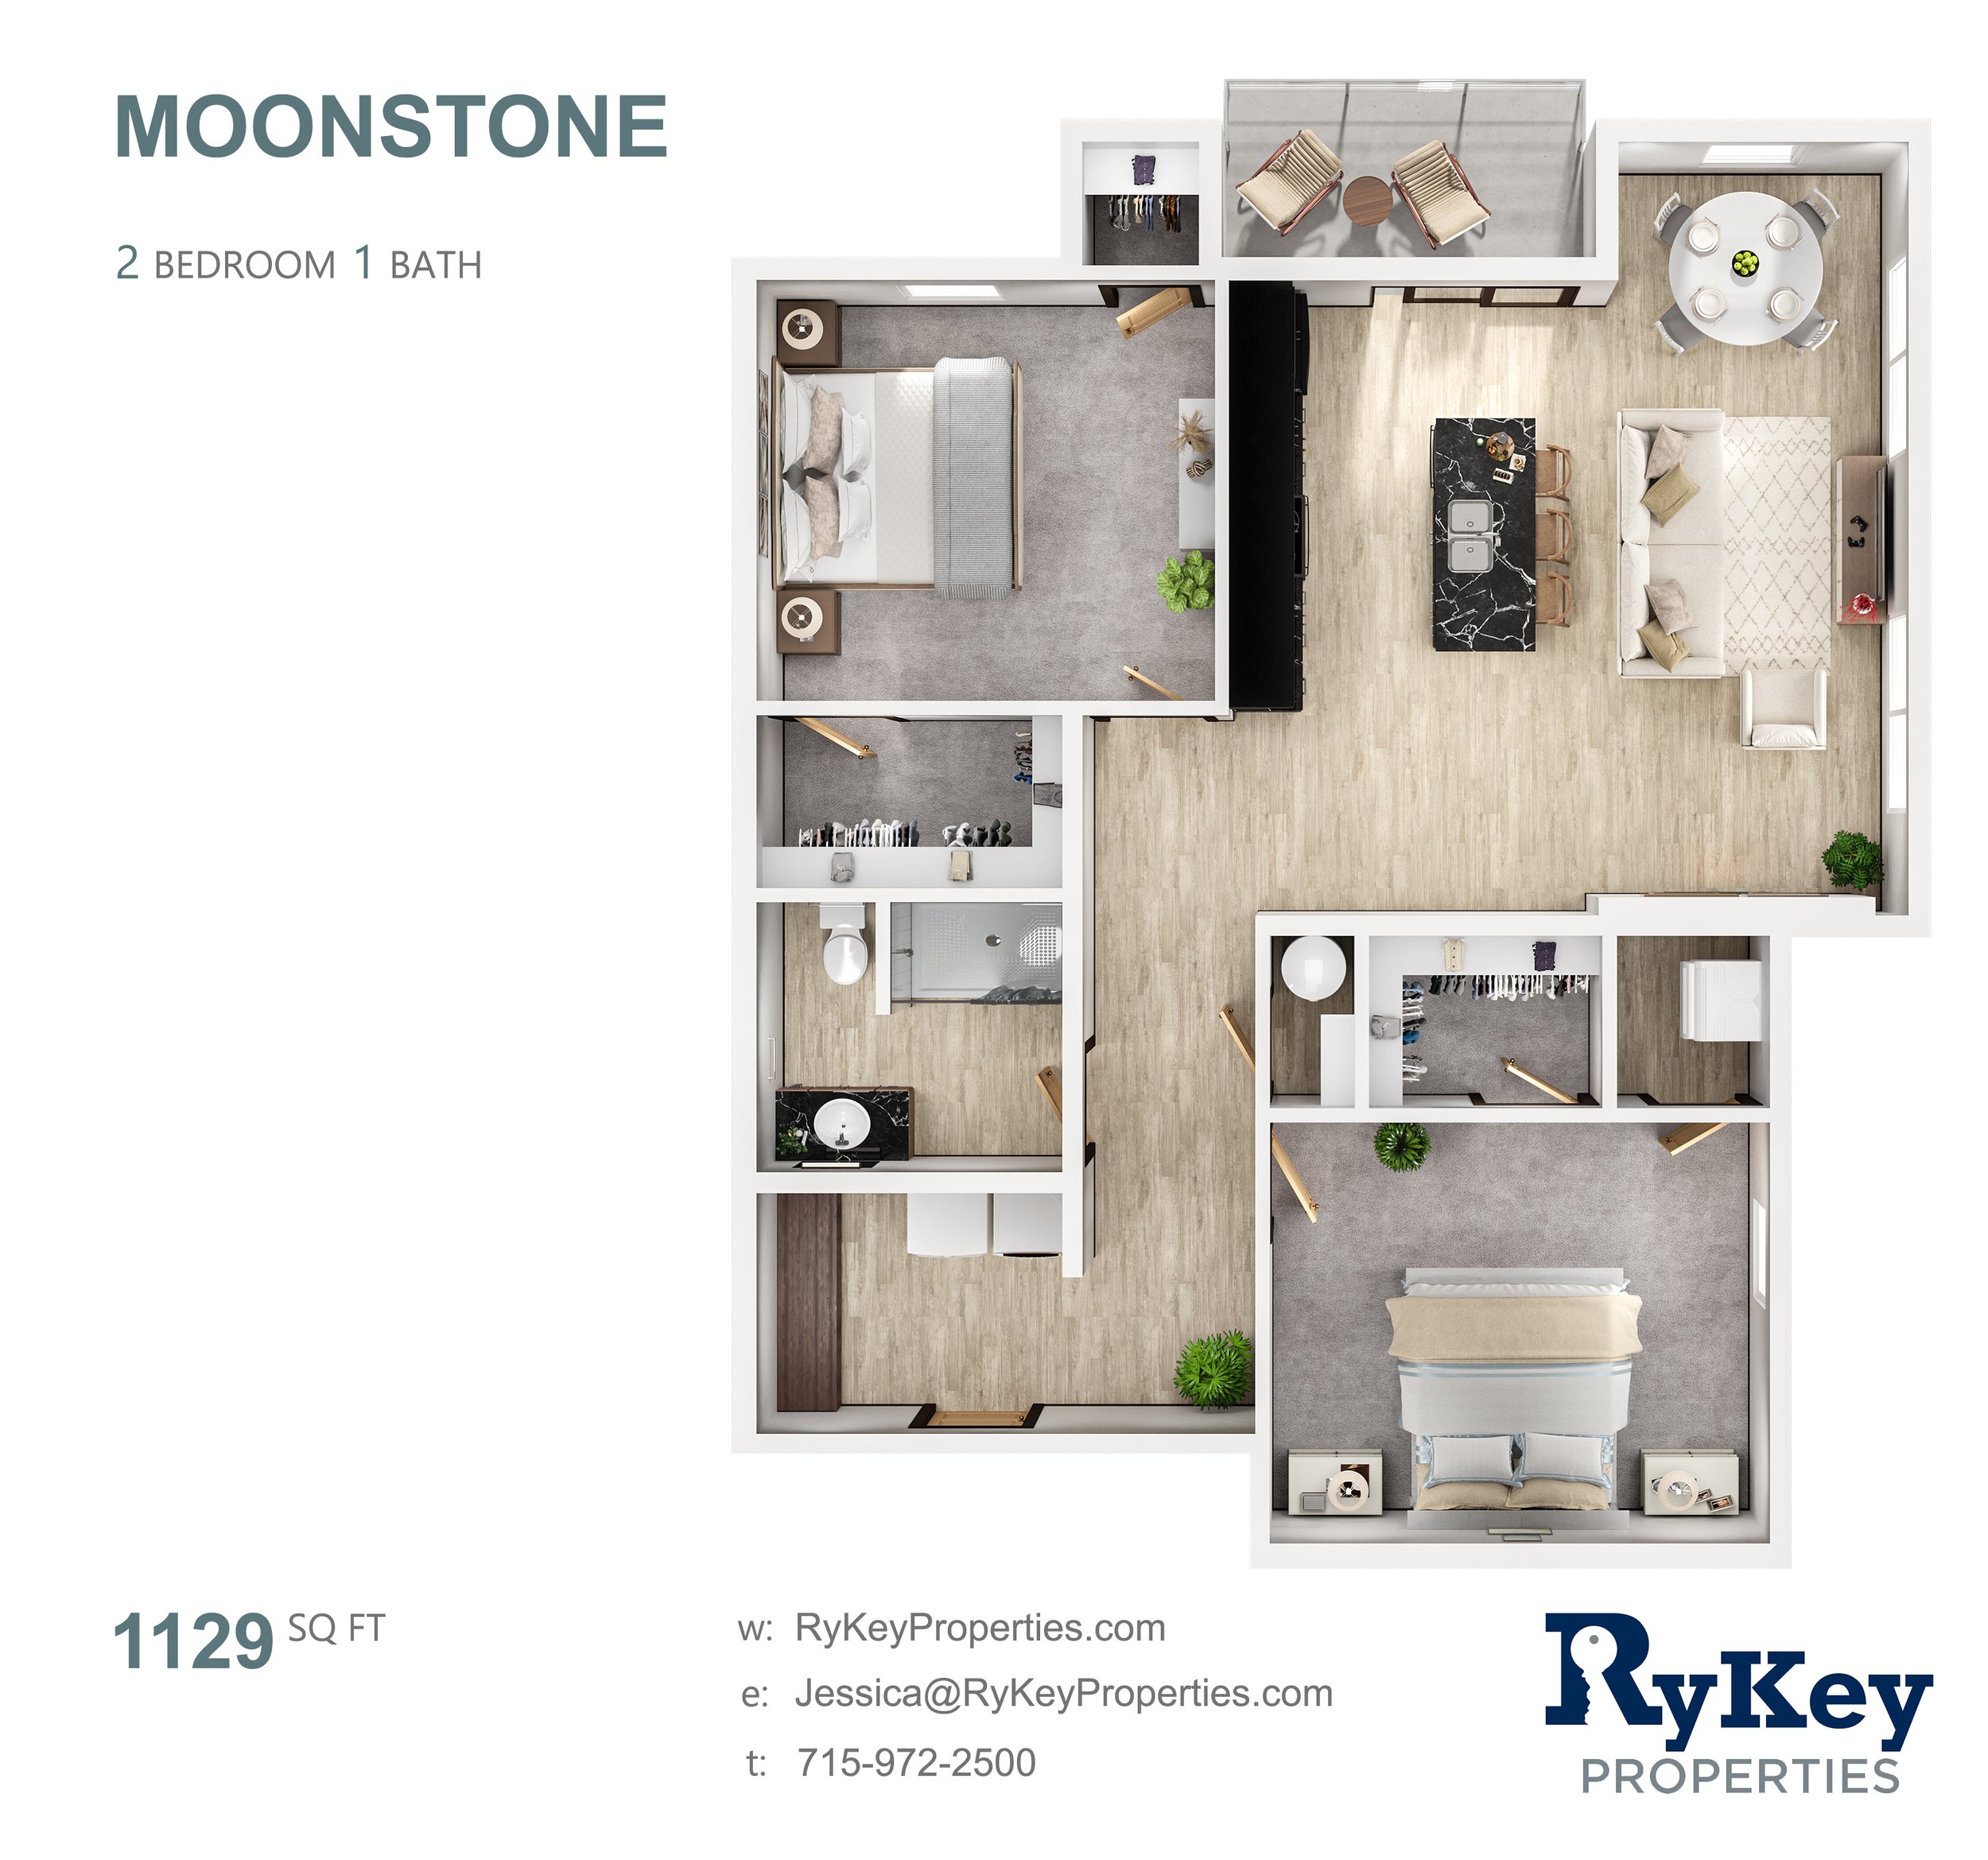 98t_Galloway Flats_RyKey Properties_L3 Moonstone_D2.jpg